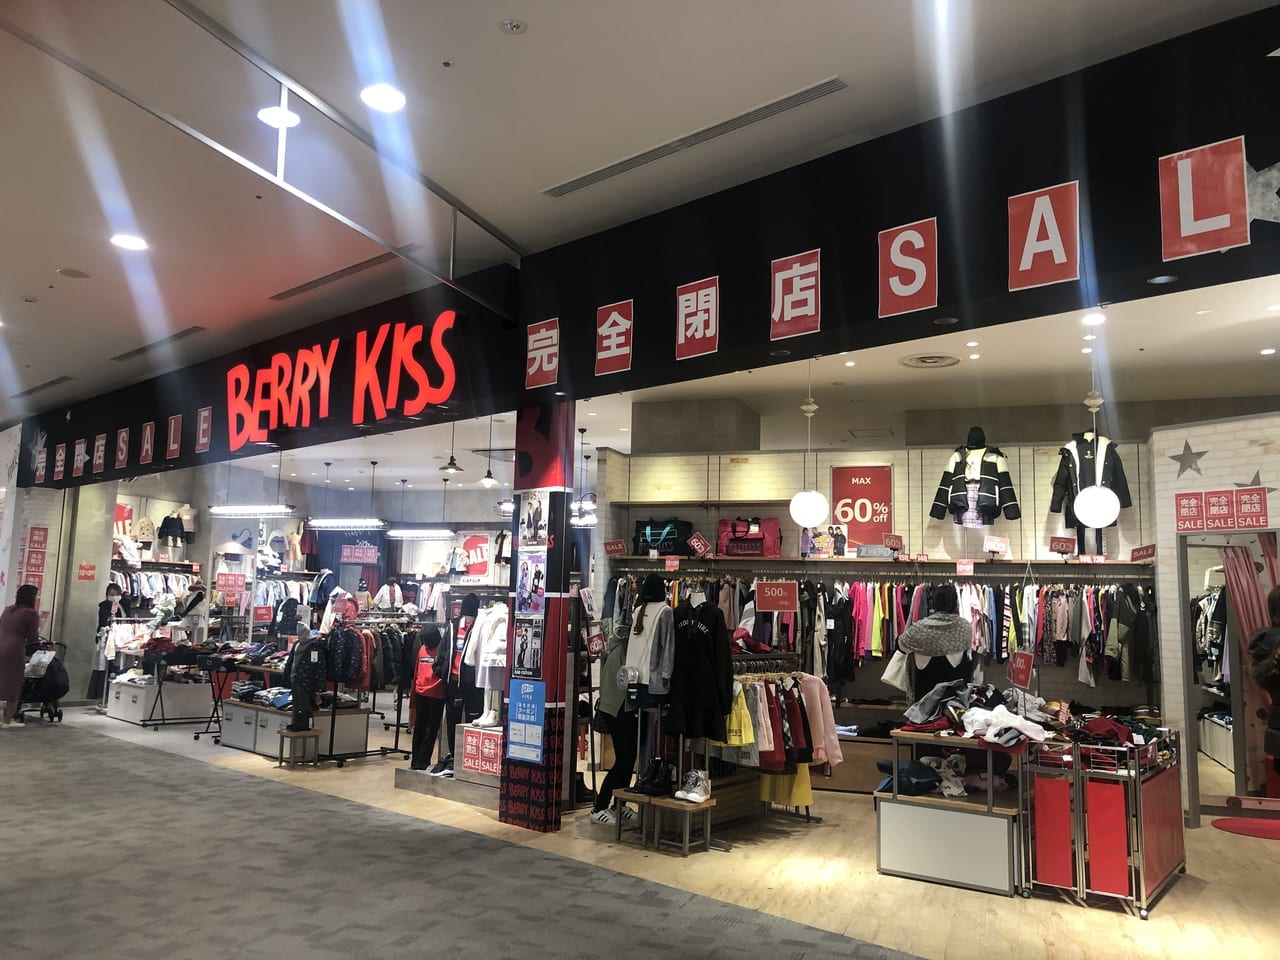 BERRY KISS東員店閉店